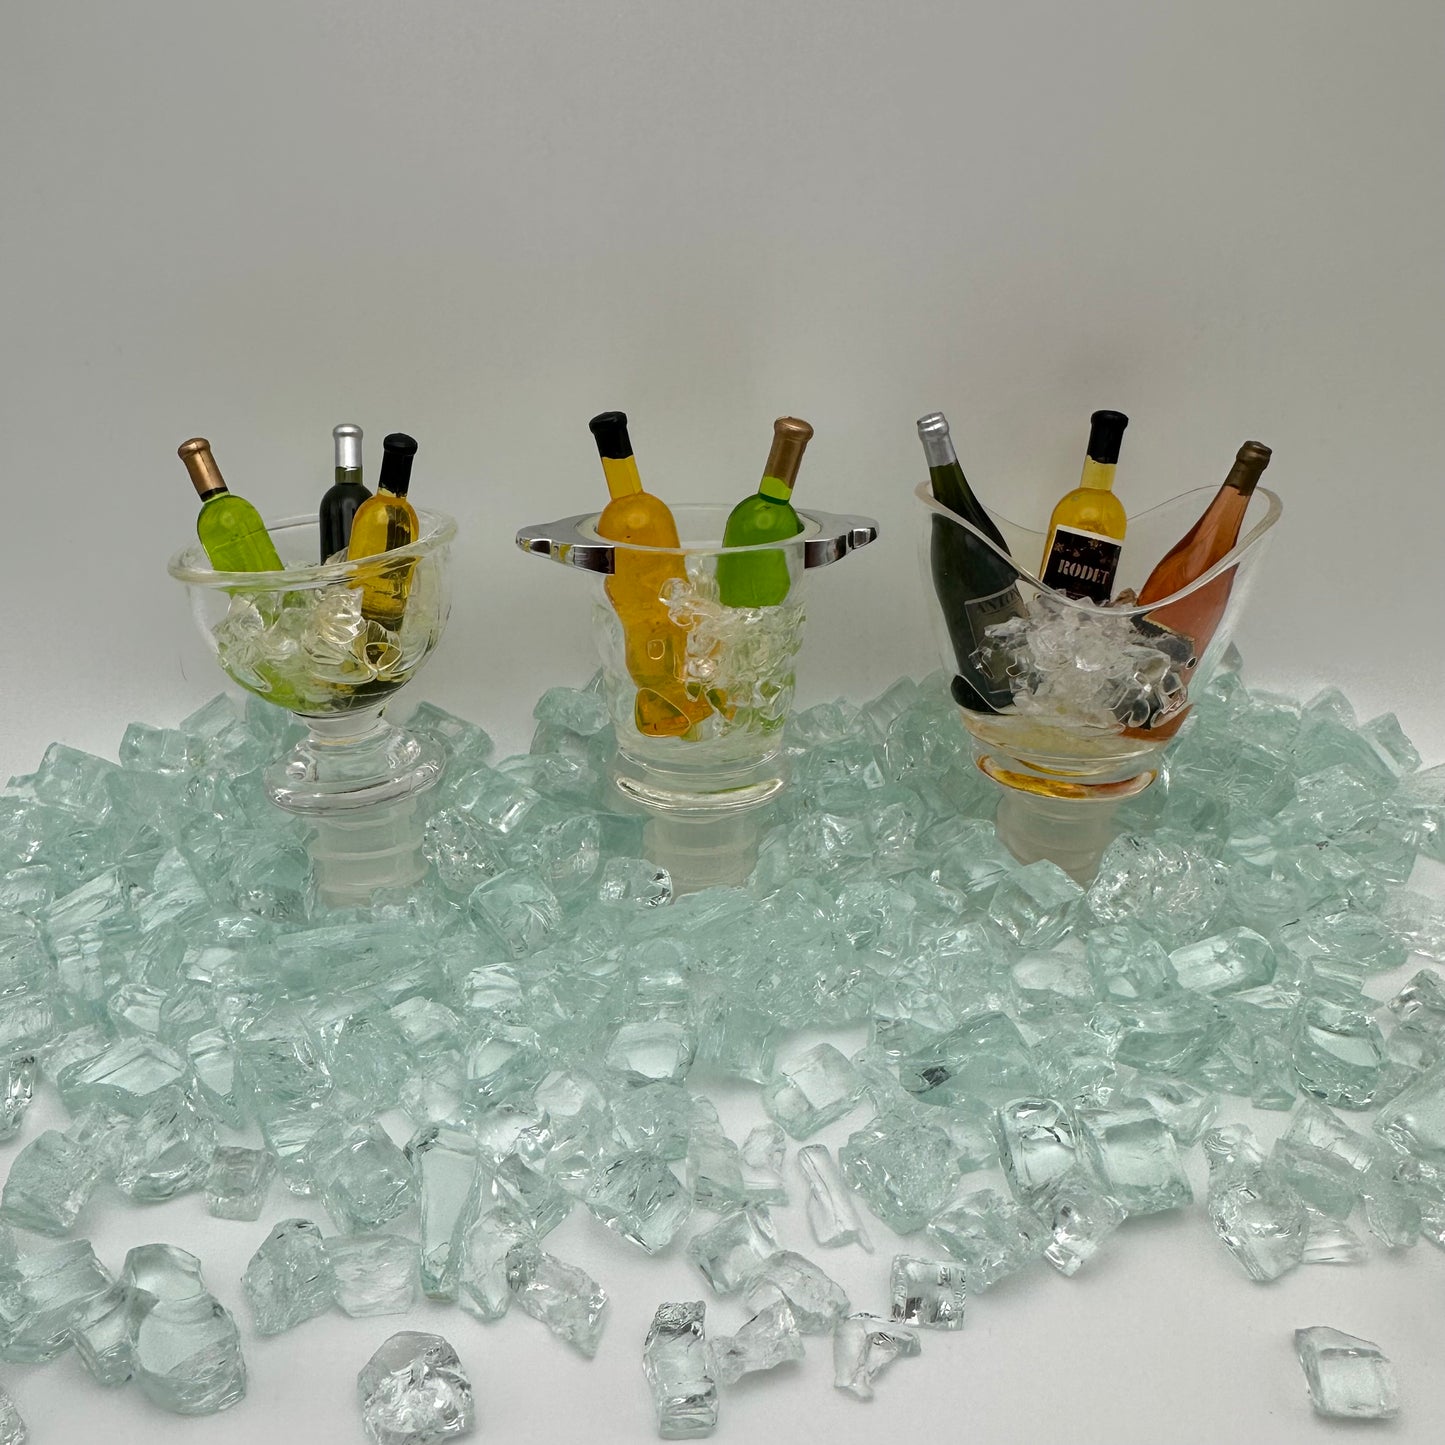 3 mini wine stoppers that look like bottles of wine in ice buckets.